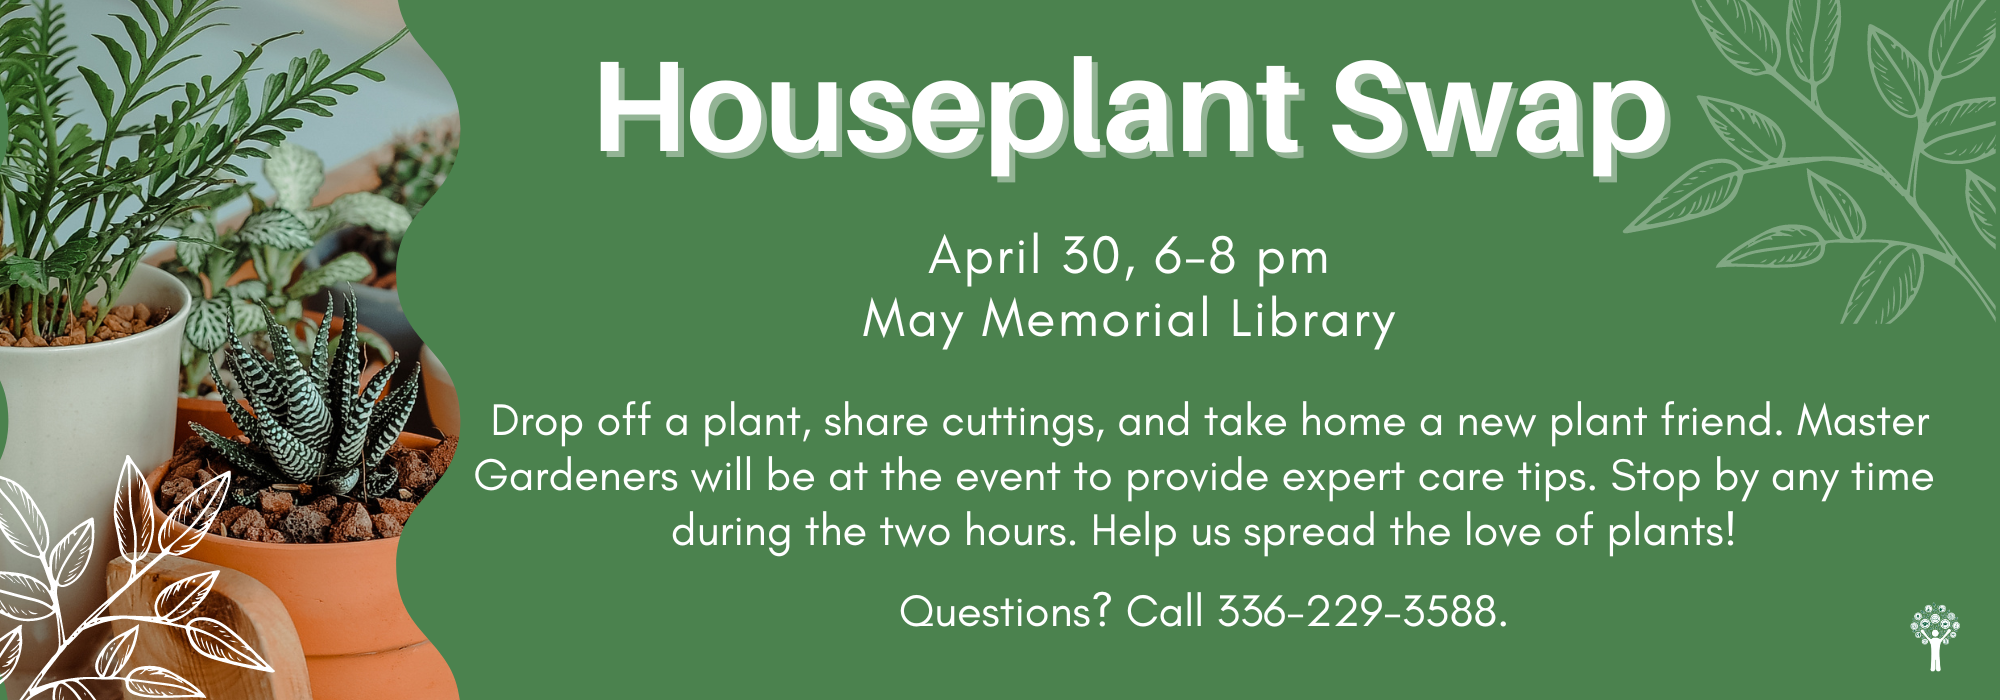 4.30 at 6 pm - Houseplant Swap at May Memorial